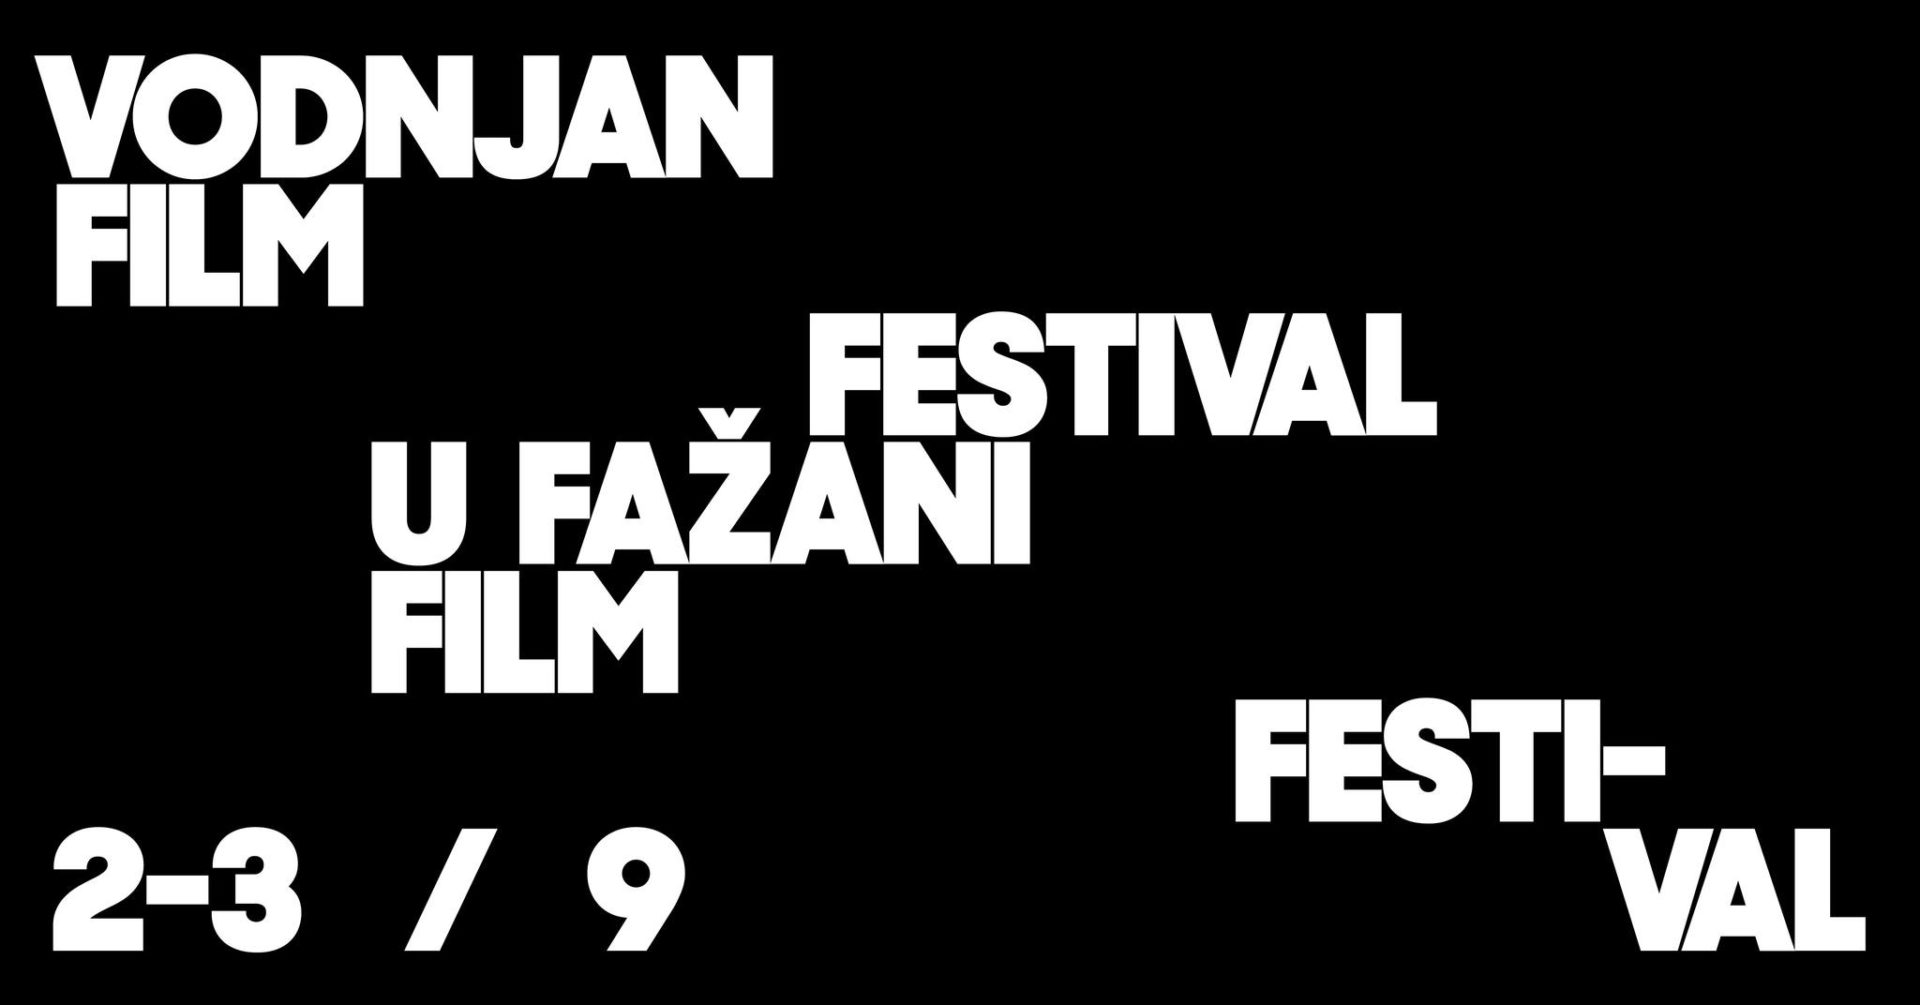 Vodnjan Film Festival u Fažani